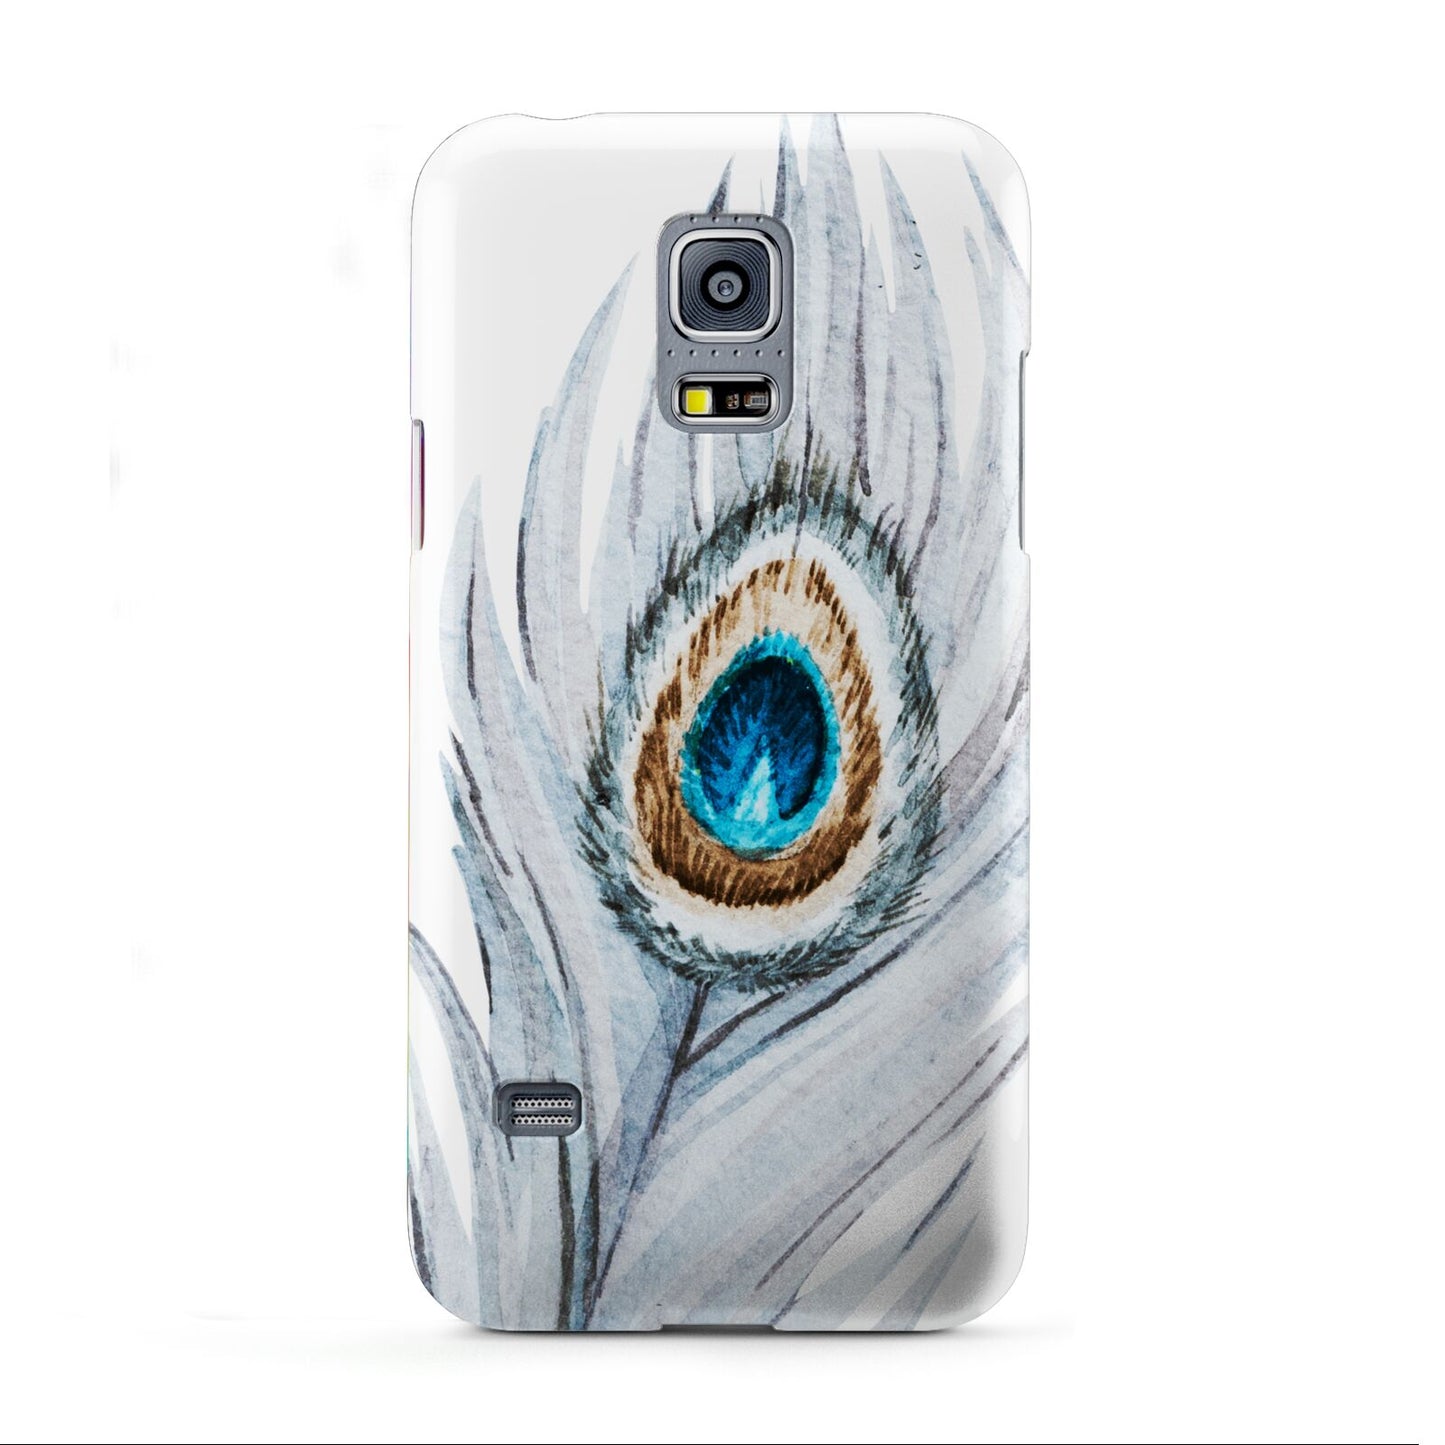 Peacock Samsung Galaxy S5 Mini Case